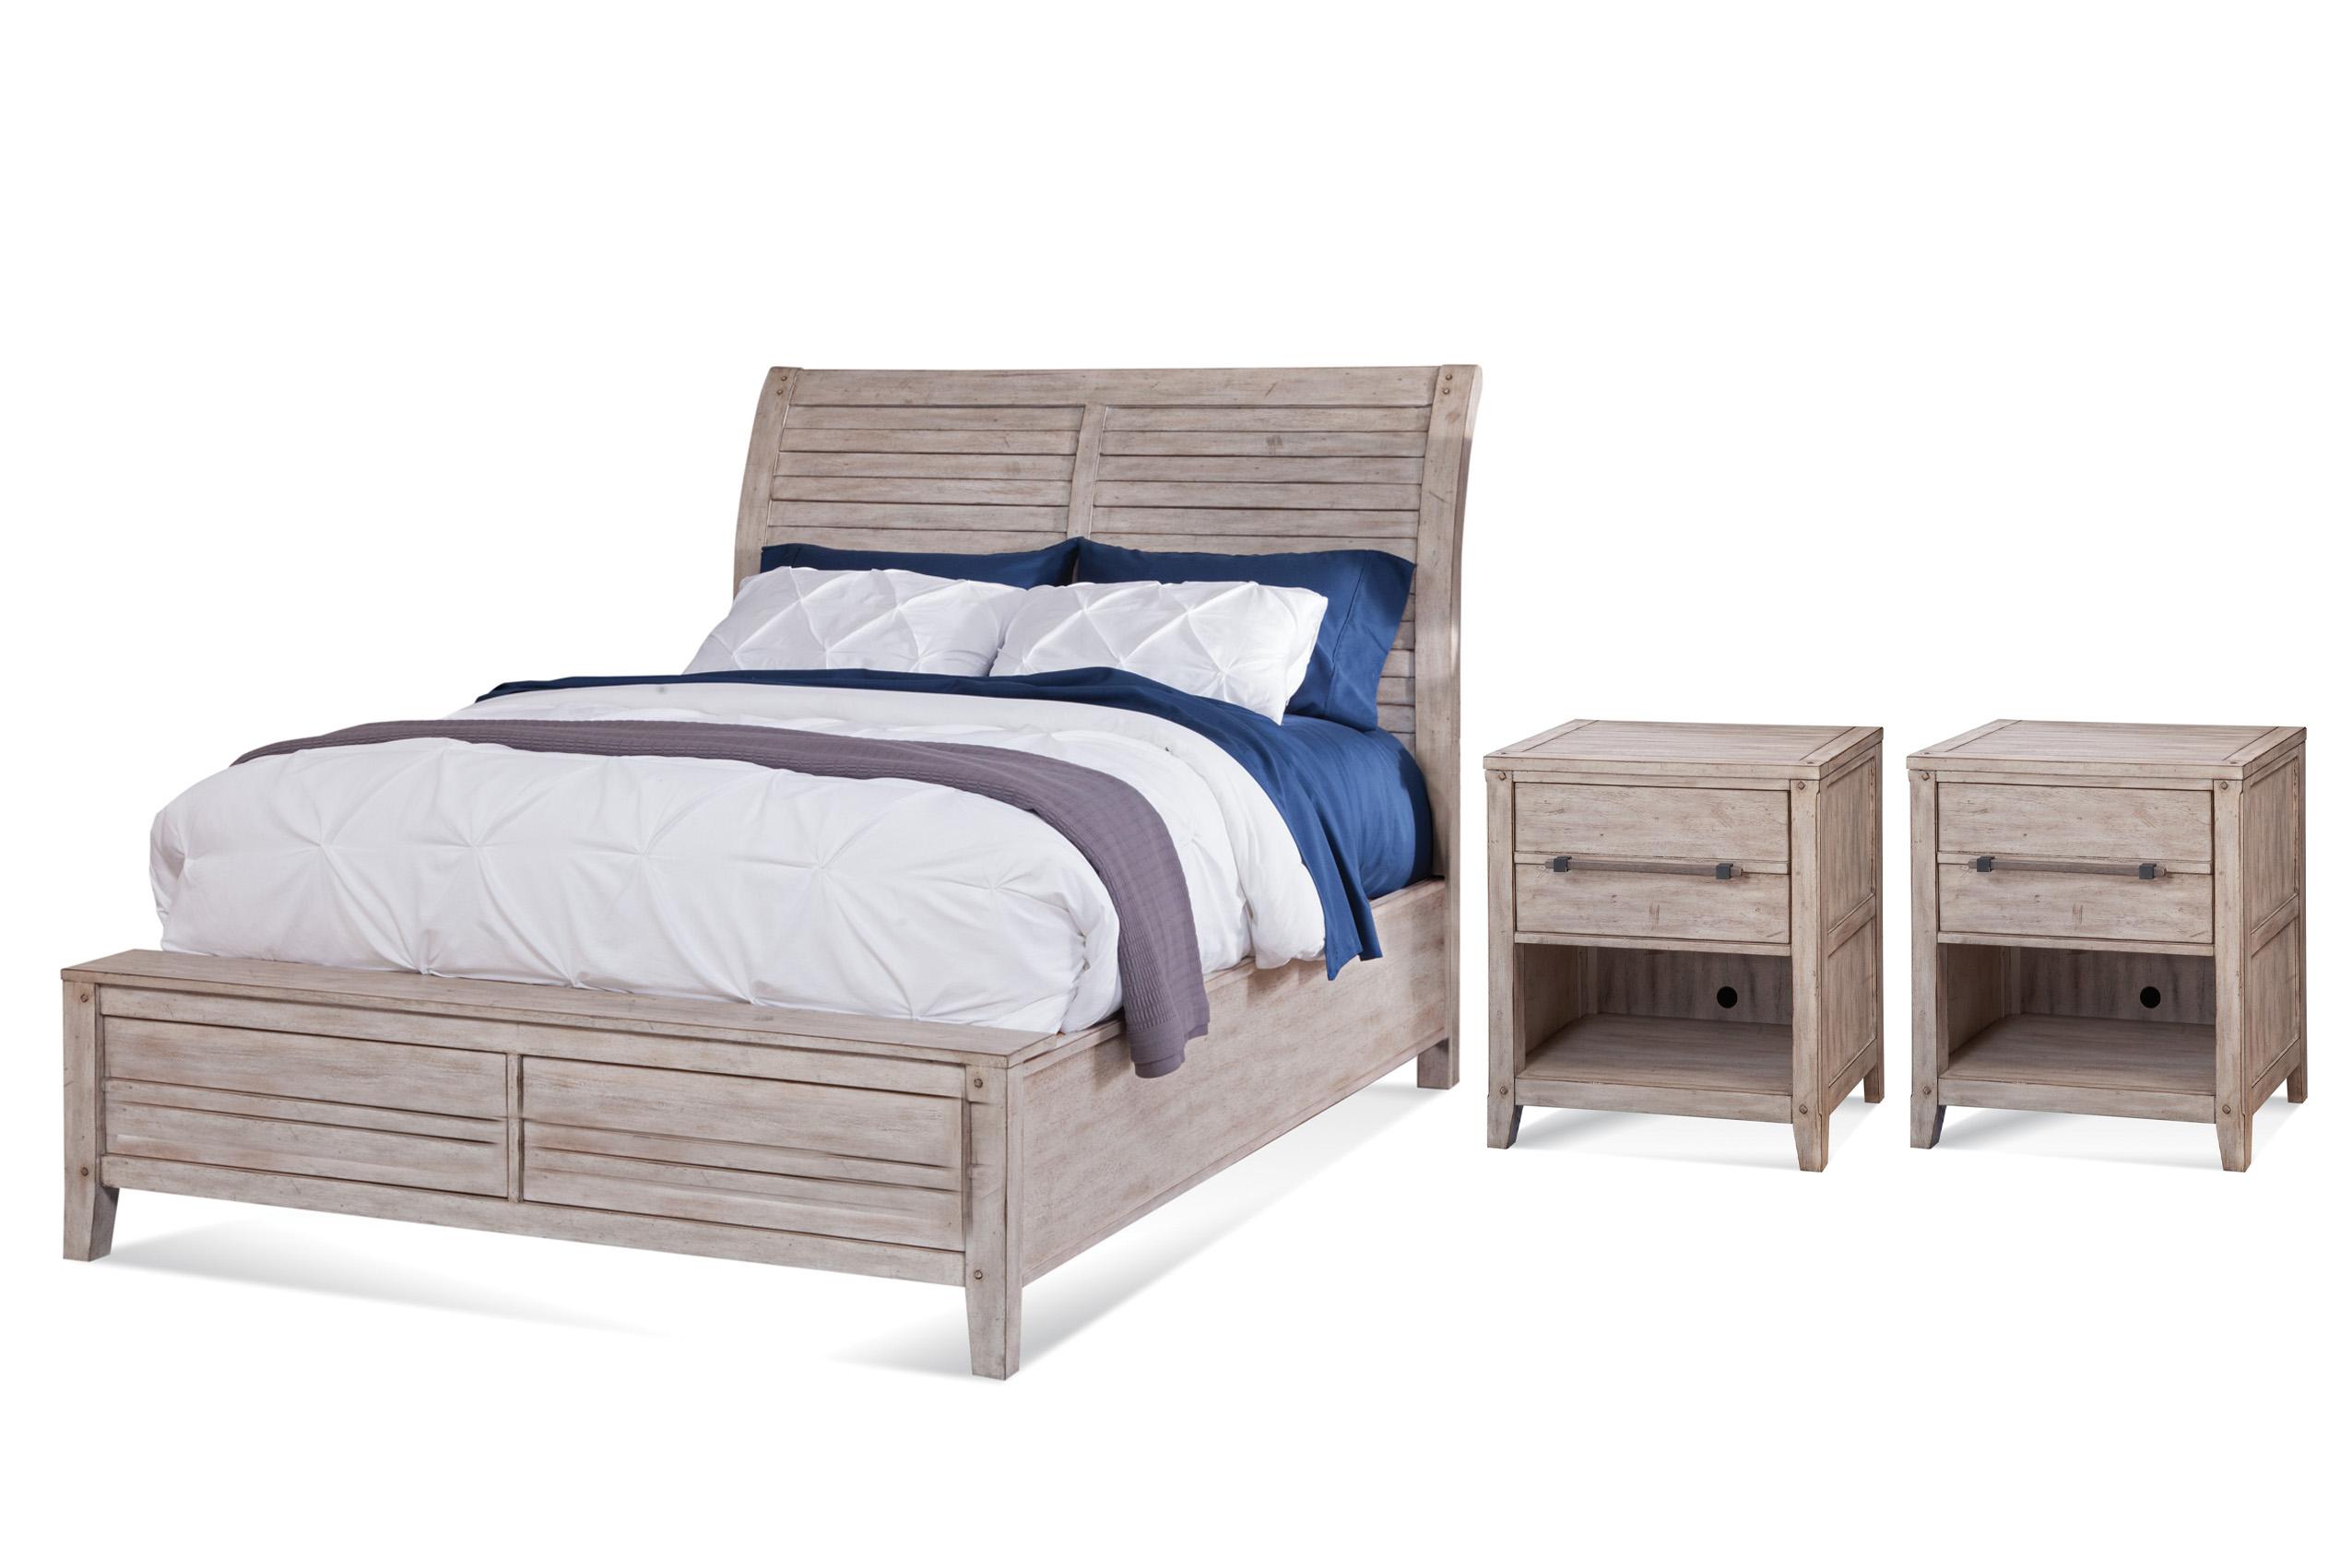 Classic, Traditional Sleigh Bedroom Set AURORA 2810-50SLP 2810-50SLPN-2N-3PC in whitewash 